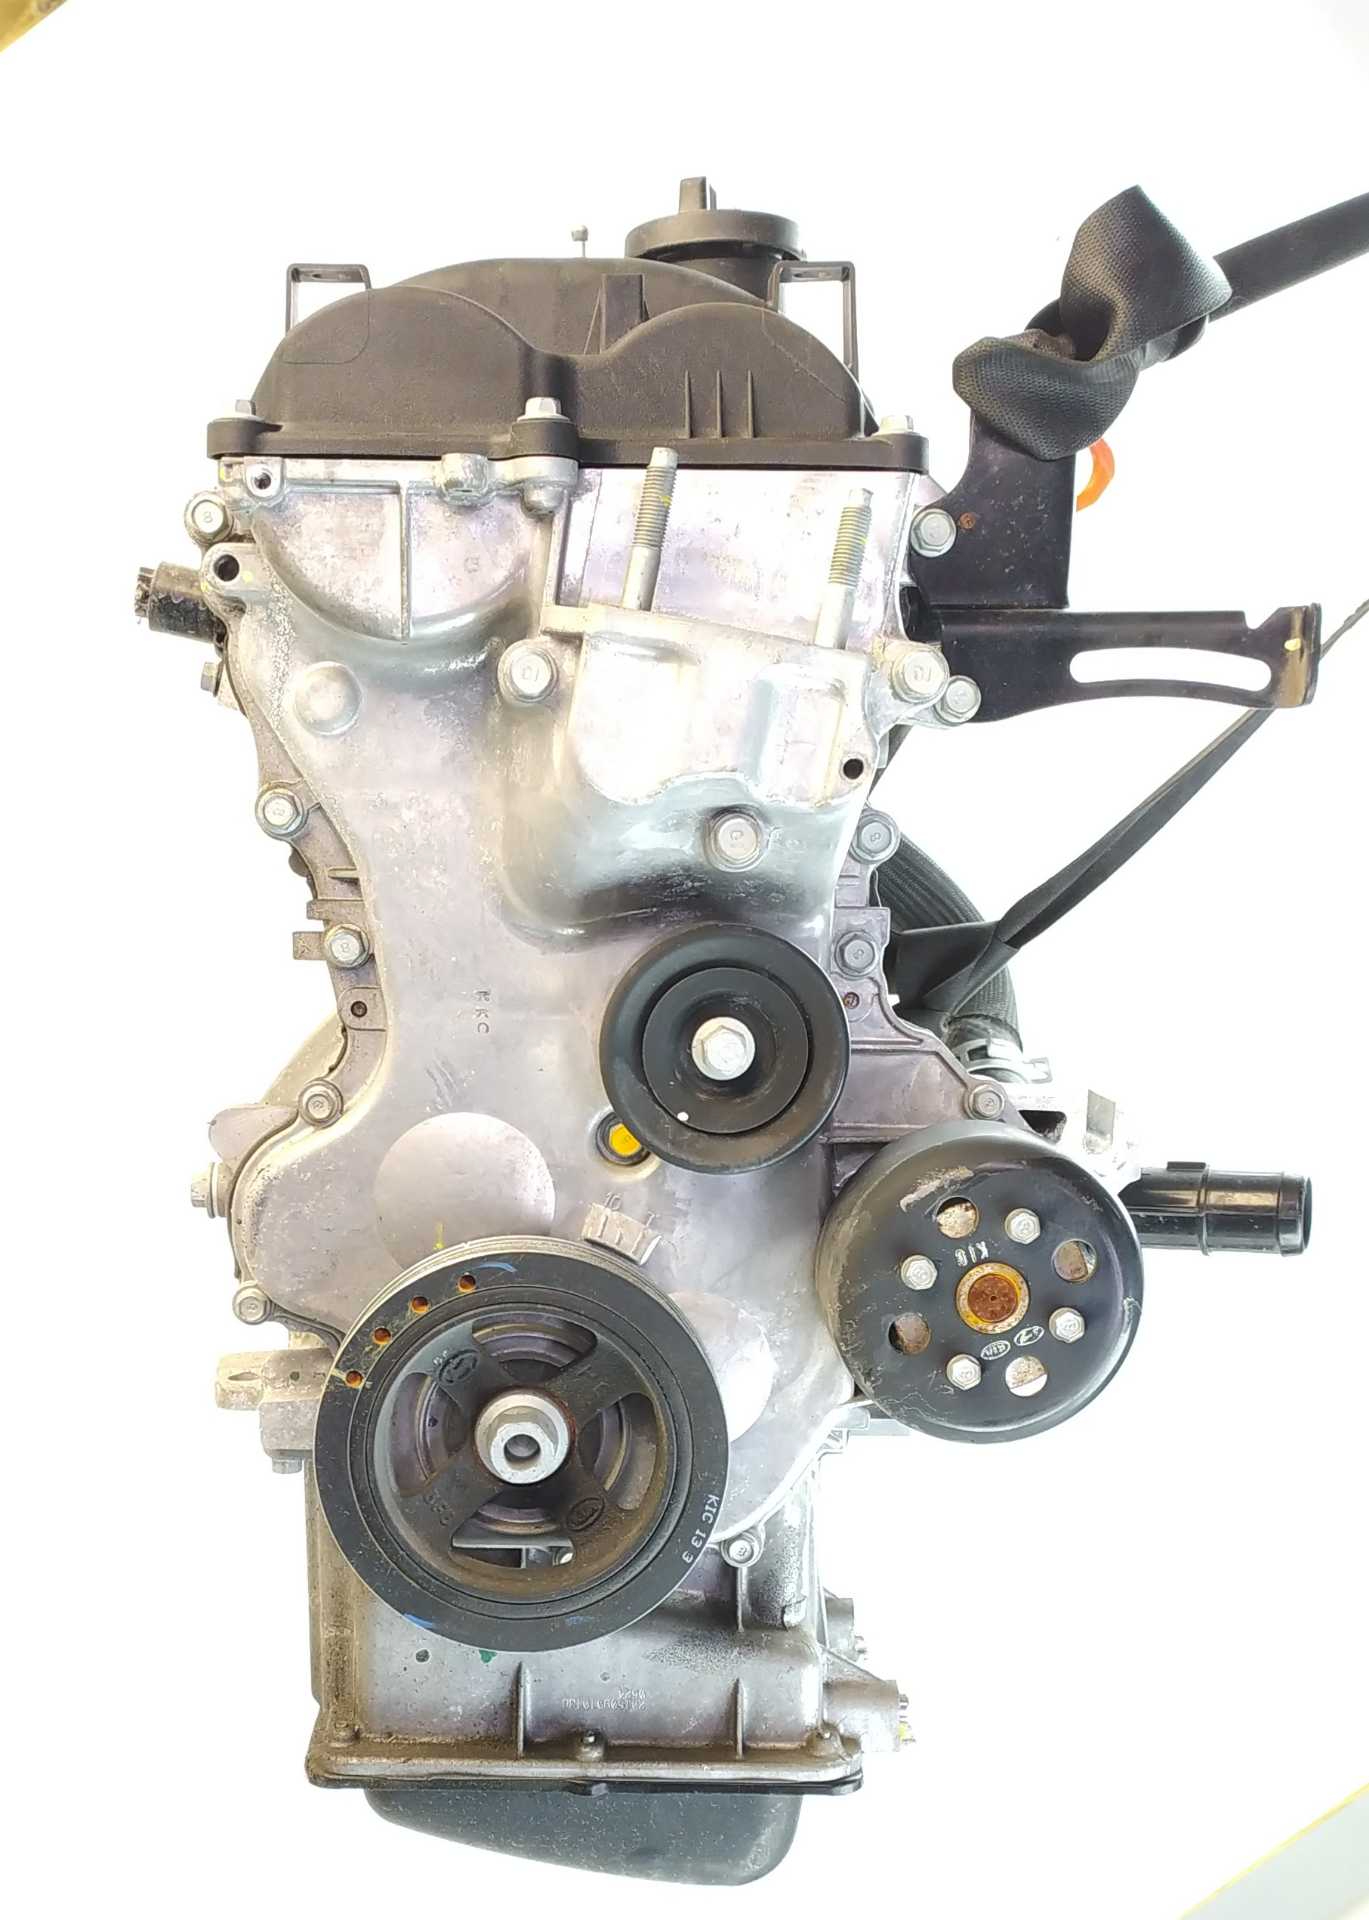 MOTOR HYUNDAI i30 1.4 (74 KW / 101 CV) (12.2014 - 12.2016)